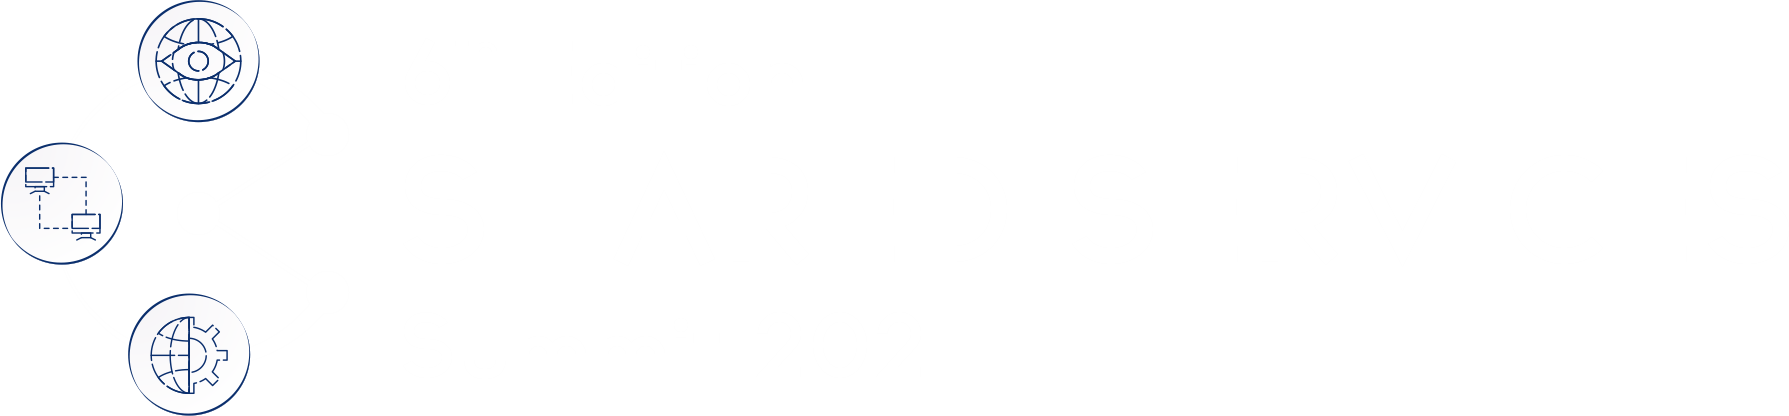 6th Edition Shared Service Summit 2021 2020 logo